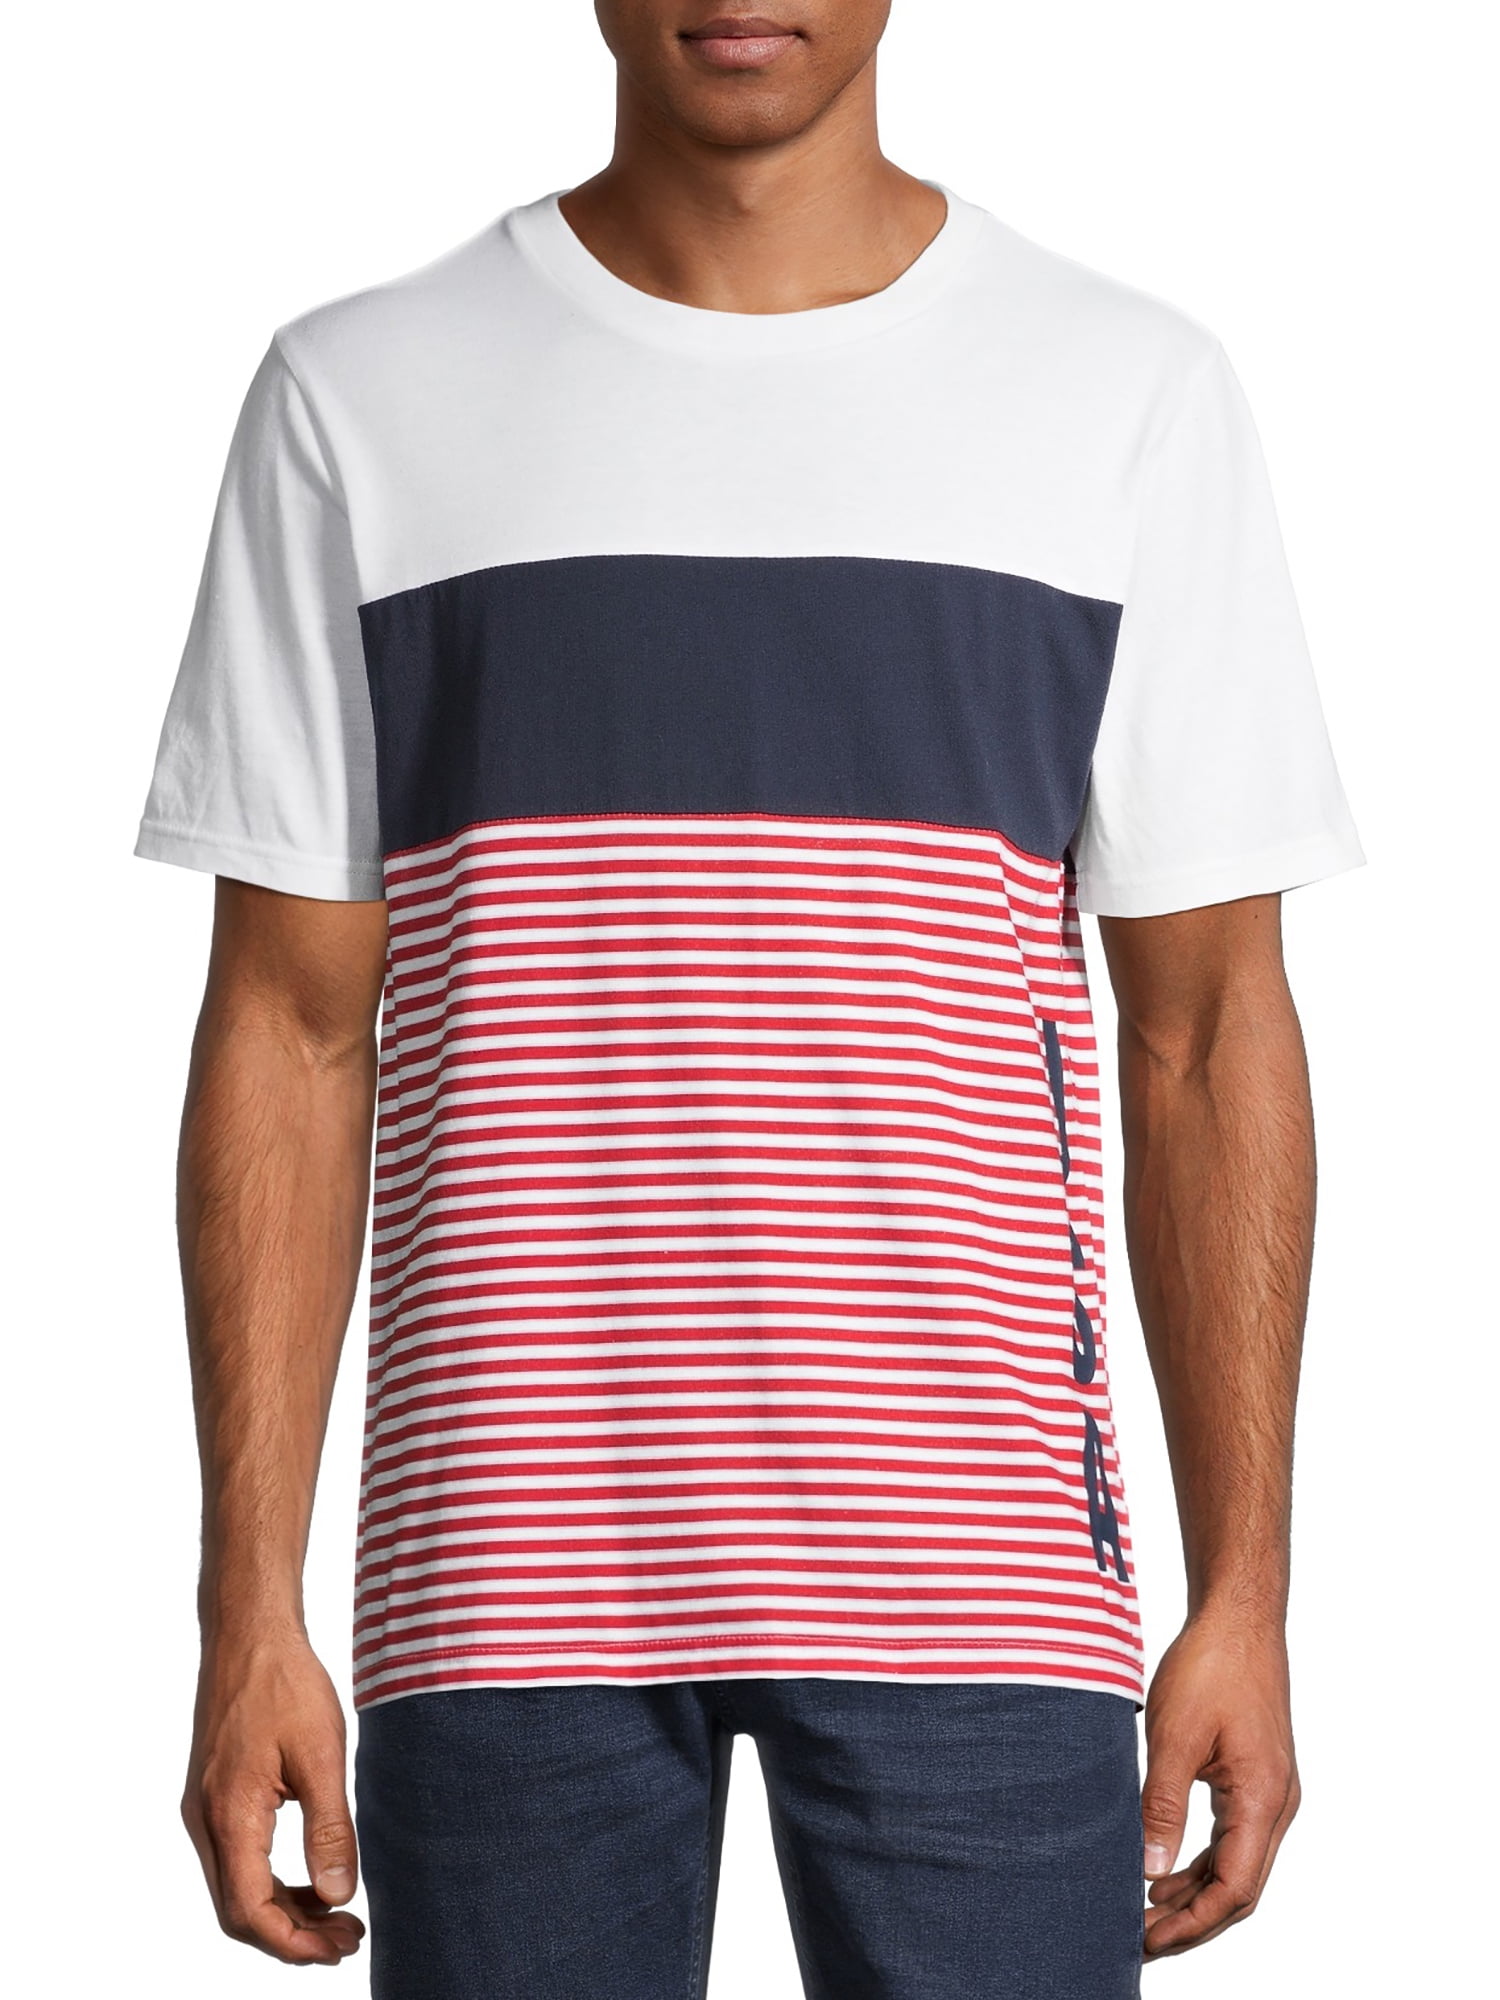 Hollywood Men's July 4th Patriotic T-Shirt, Sizes S-XL, Mens Patriotic ...